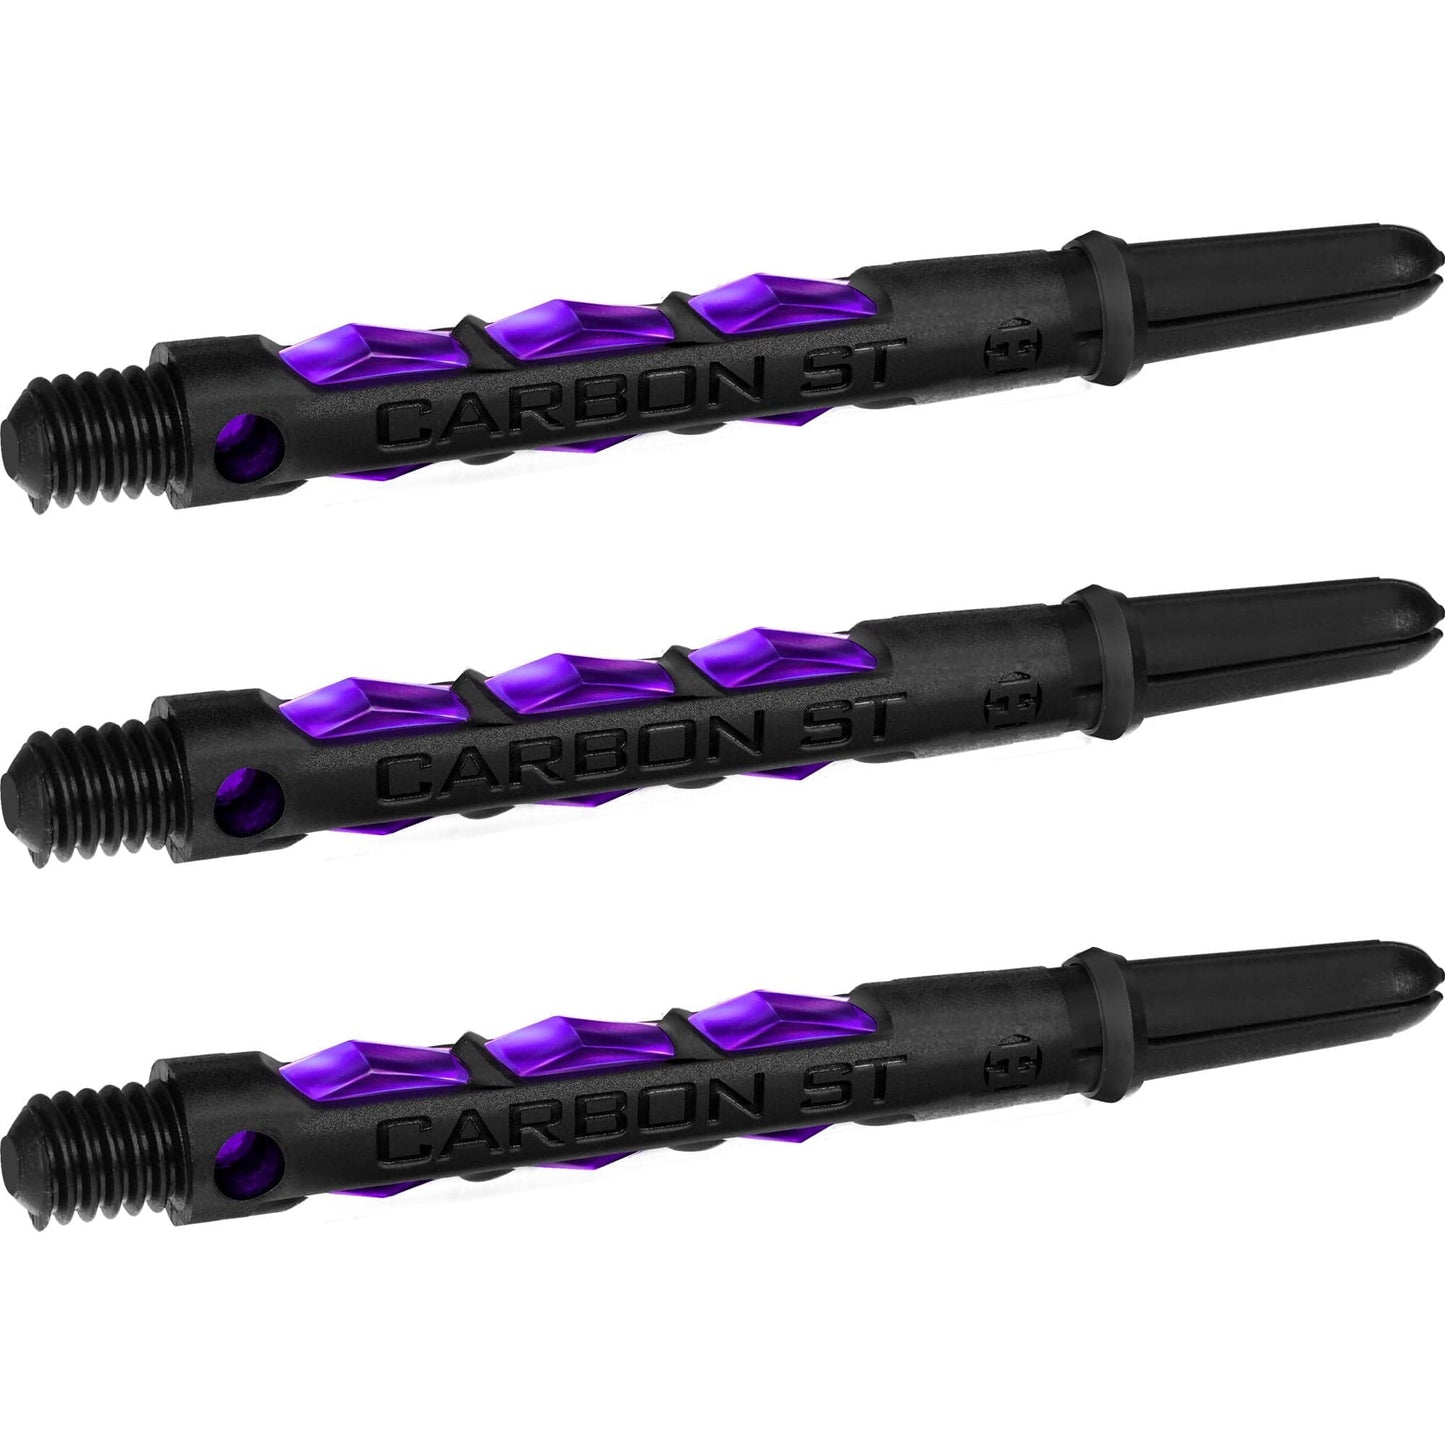 Harrows Carbon ST Shafts - Dart Stems - Black & Purple